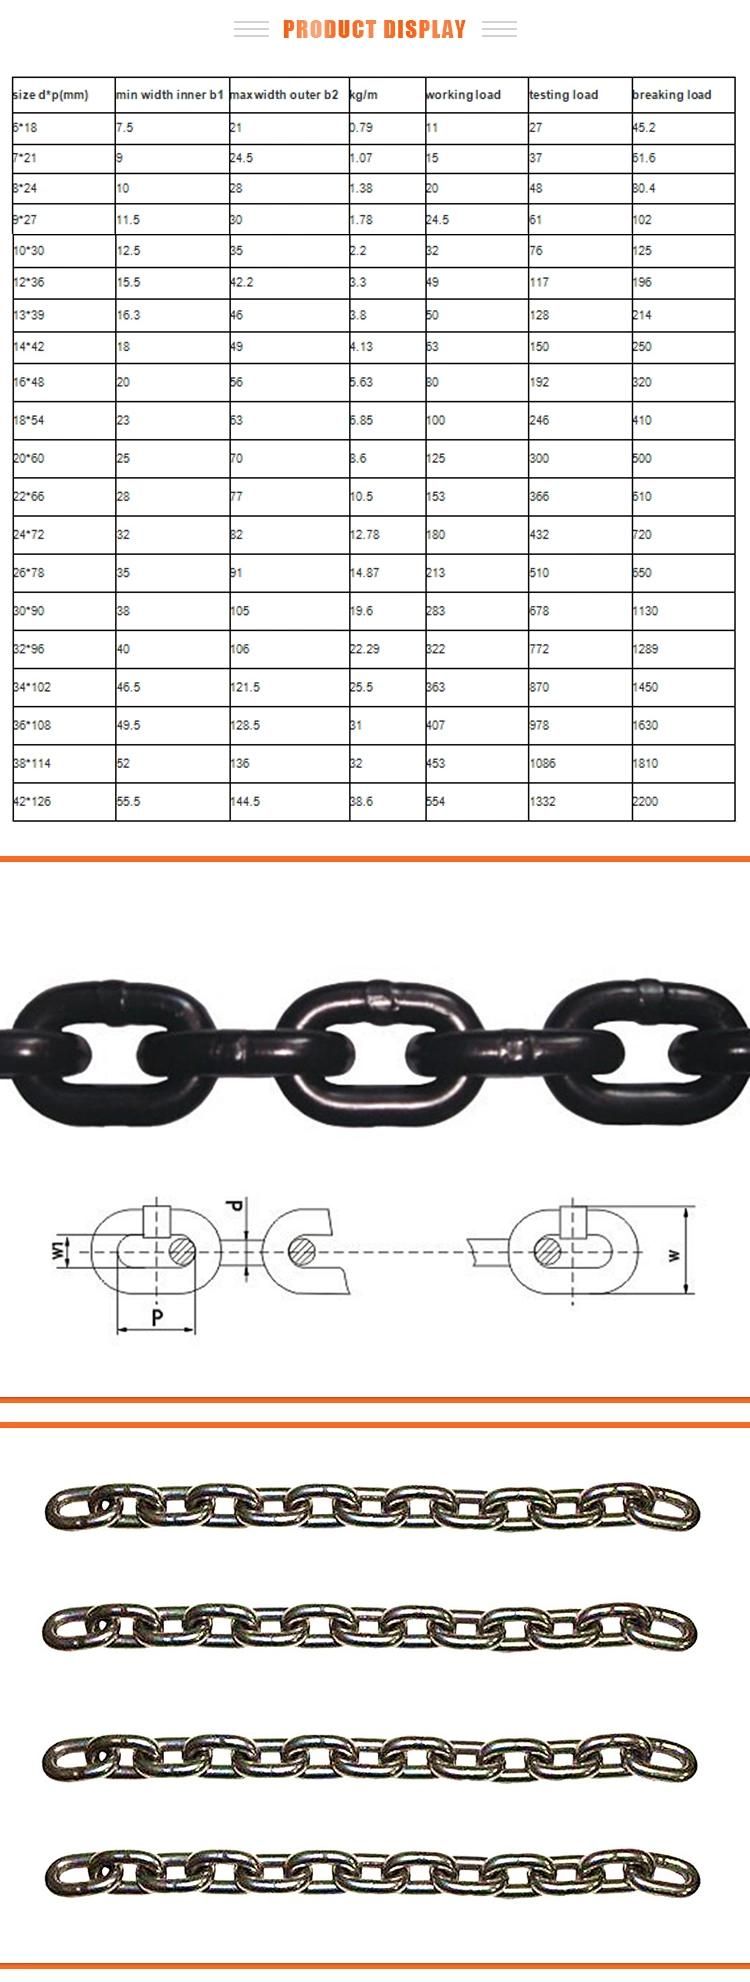 5/16" G43 High Test Liftting96 Galvanized Chain